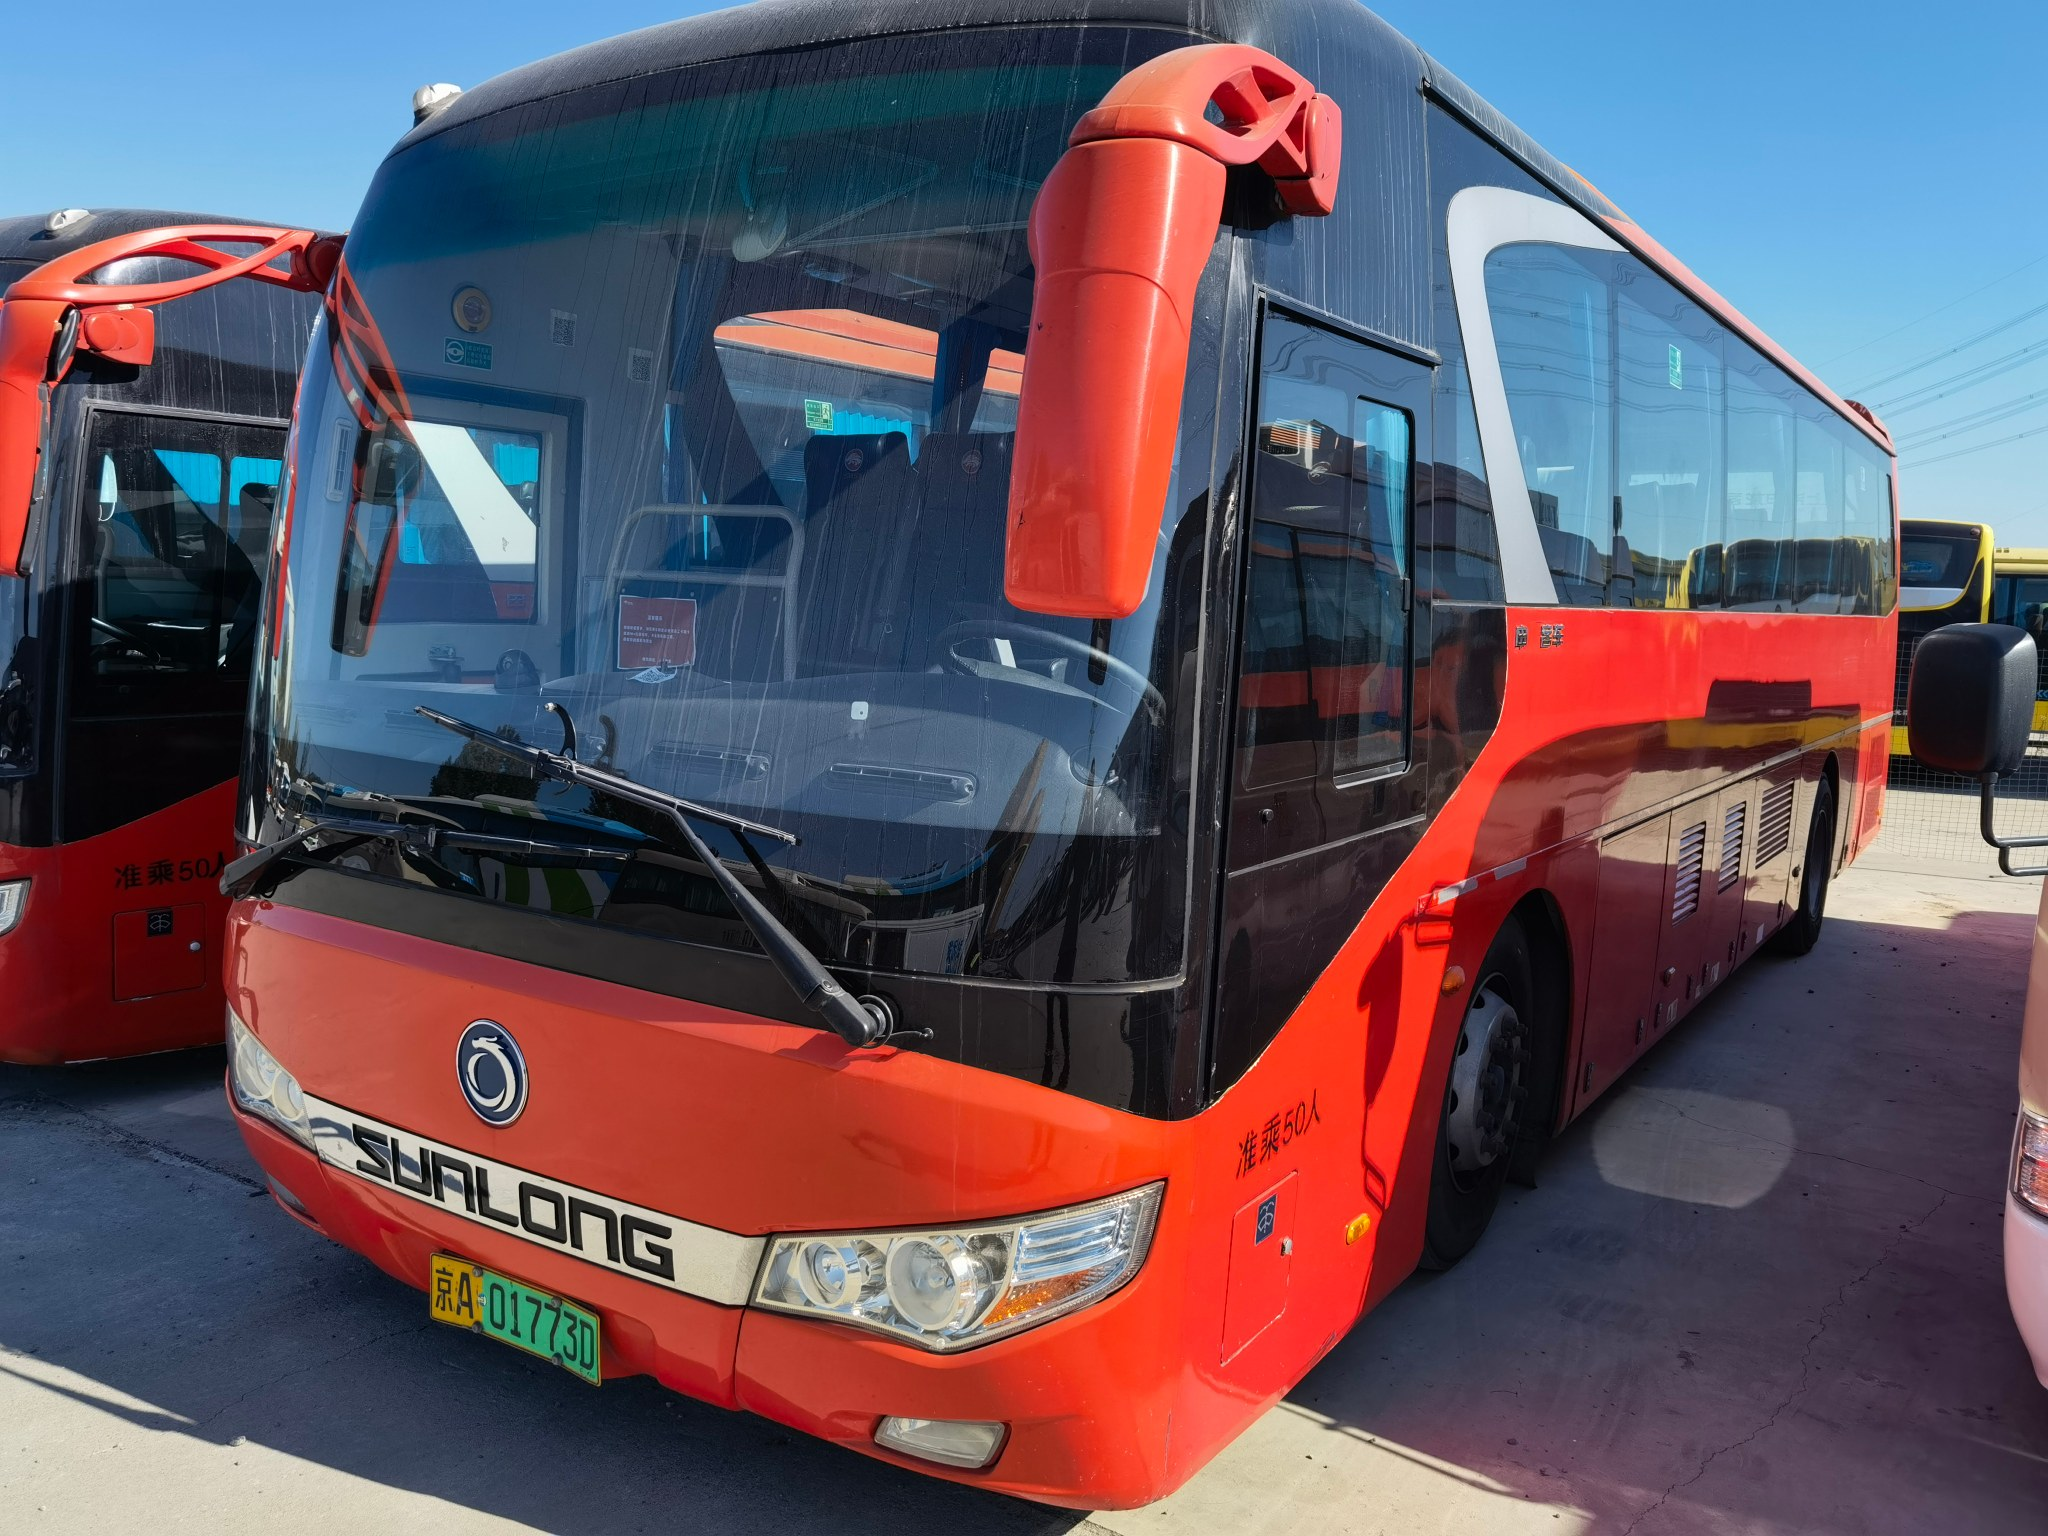 Shenlong 50 нови енергийни чисто електрически превозни средства, чисто електрически автобус, употребявана кола.